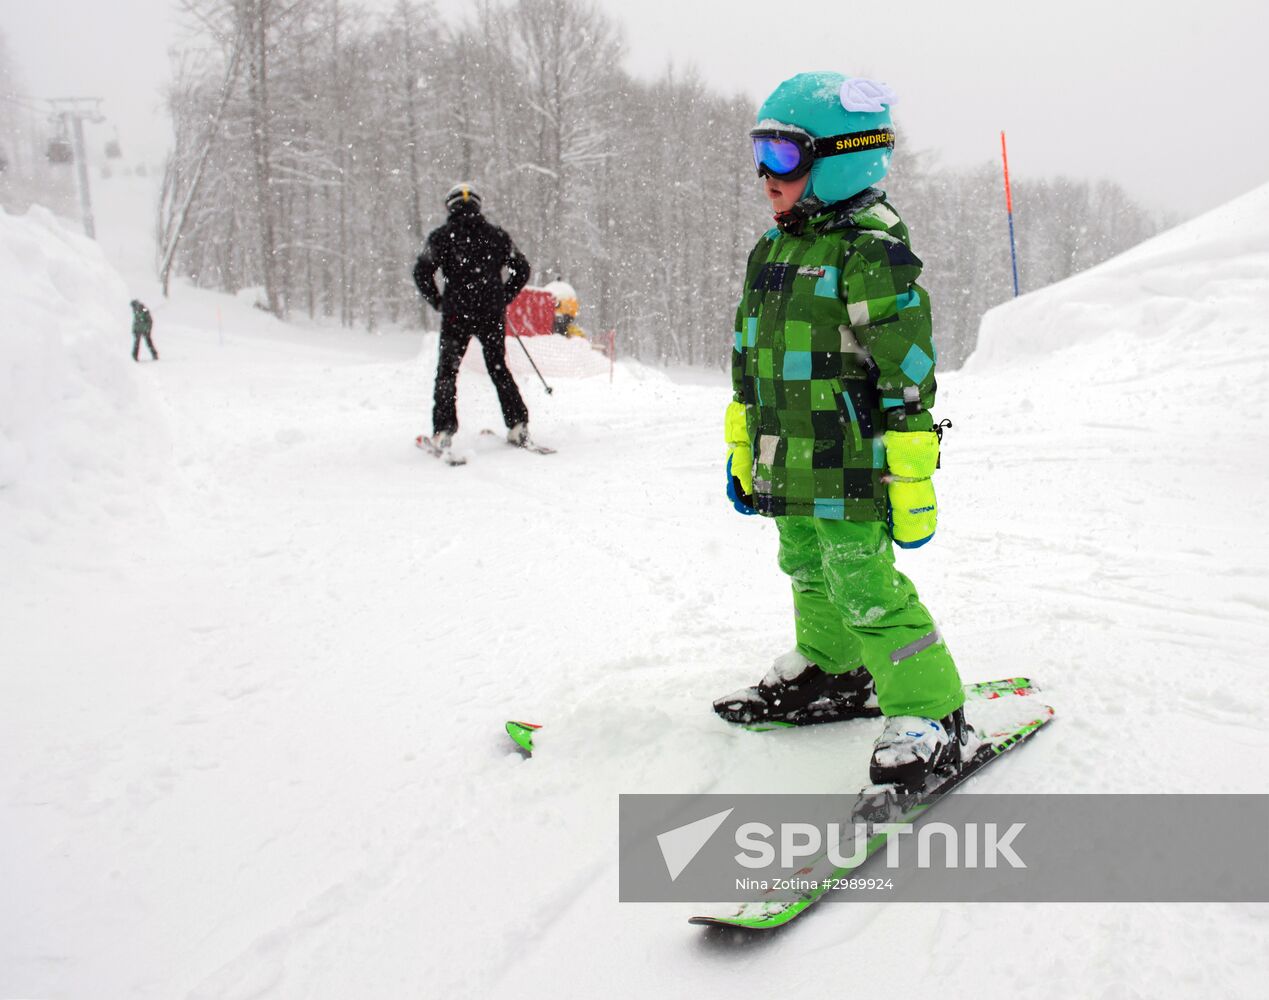 Ski season begins at Gorki Gorod ski resort in Sochi